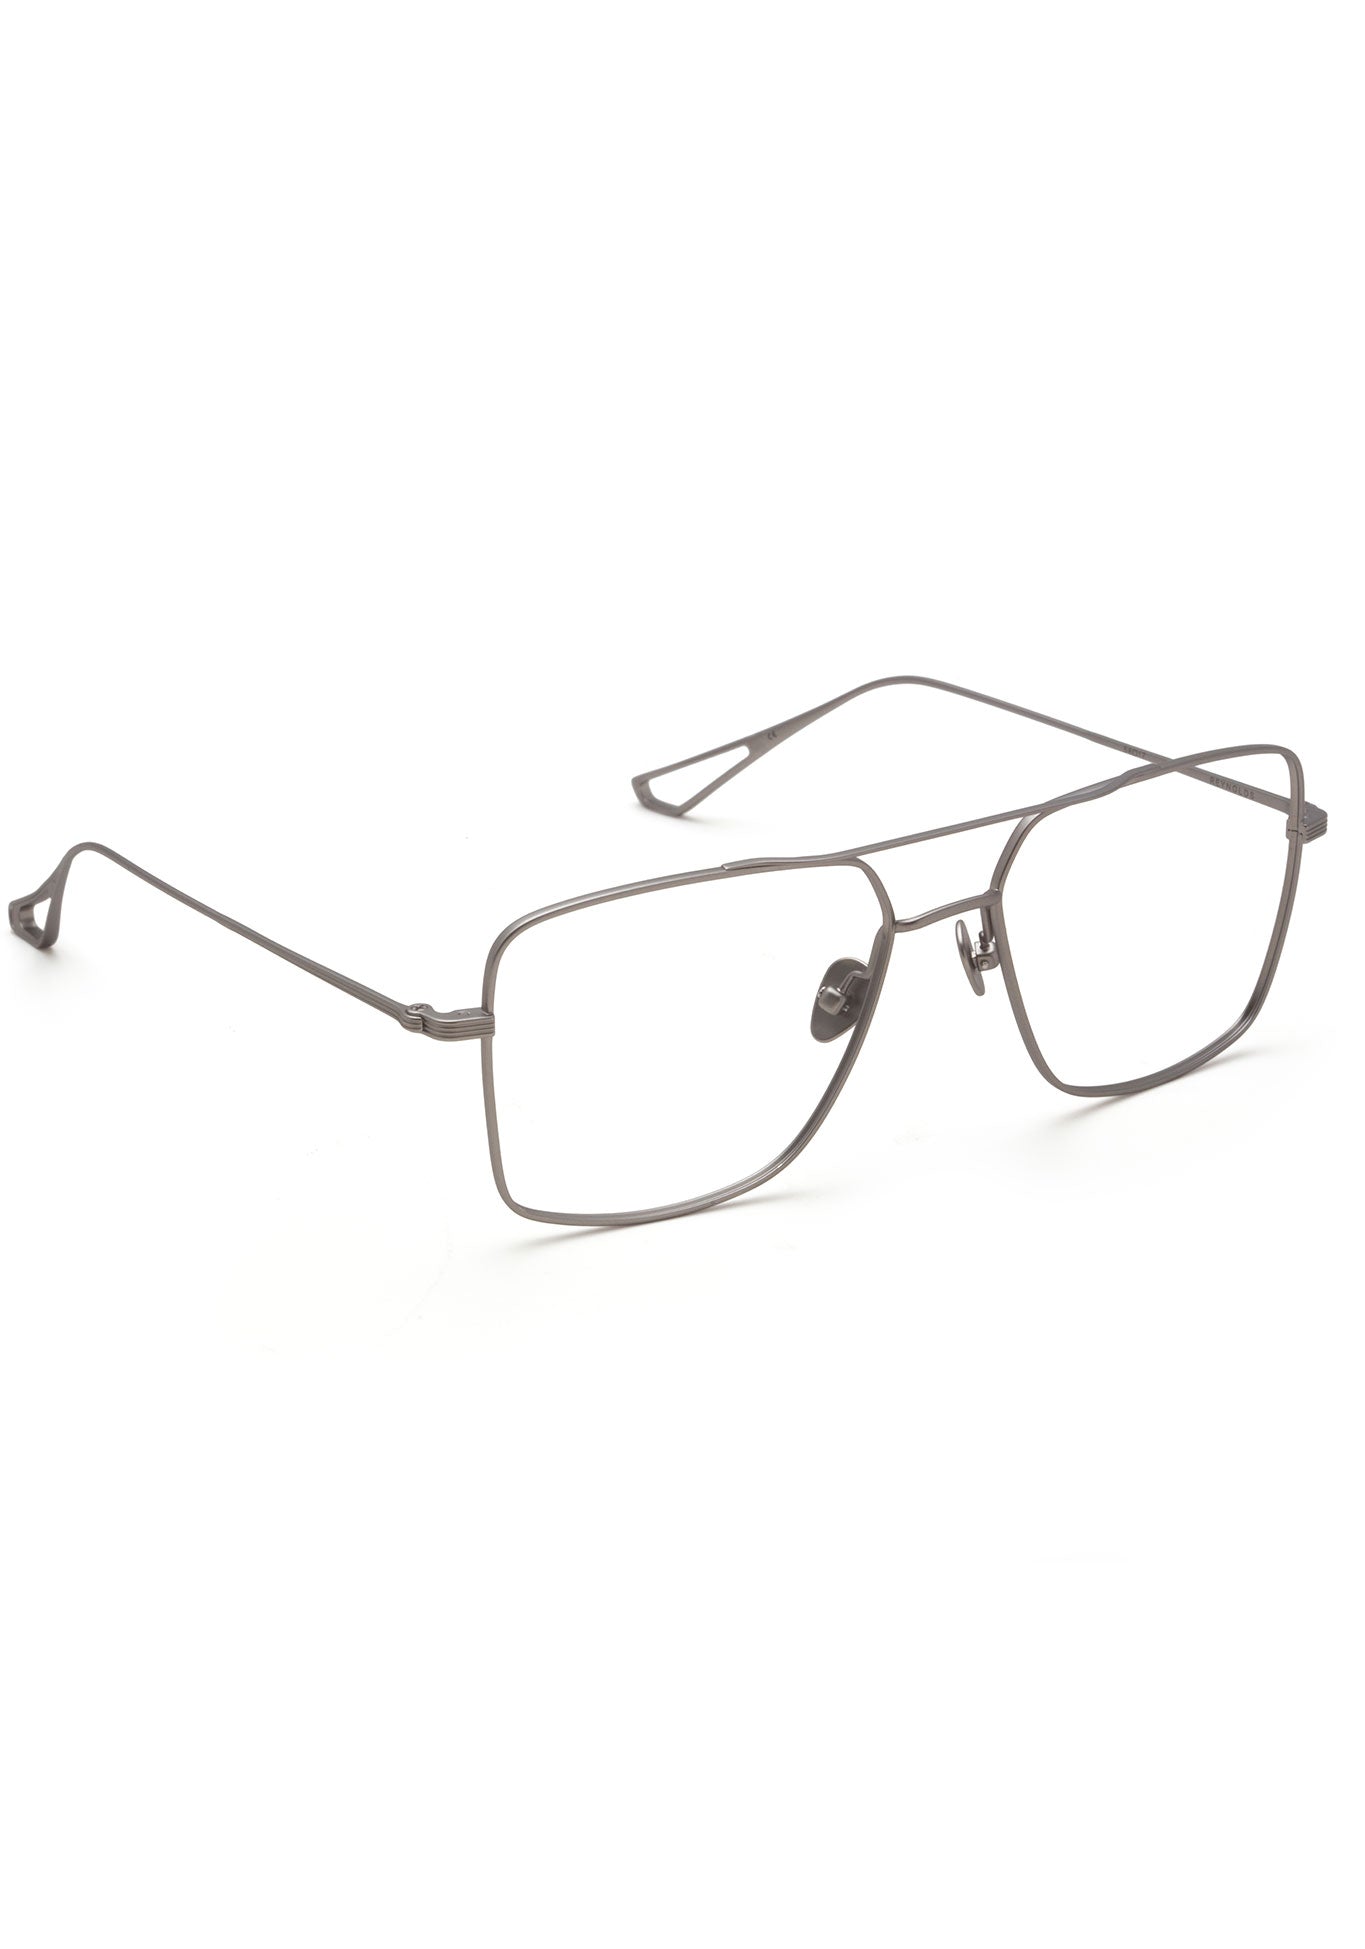 KREWE GLASSES - REYNOLDS | Matte Raw Titanium handcrafted, titanium metal aviator eyeglasses